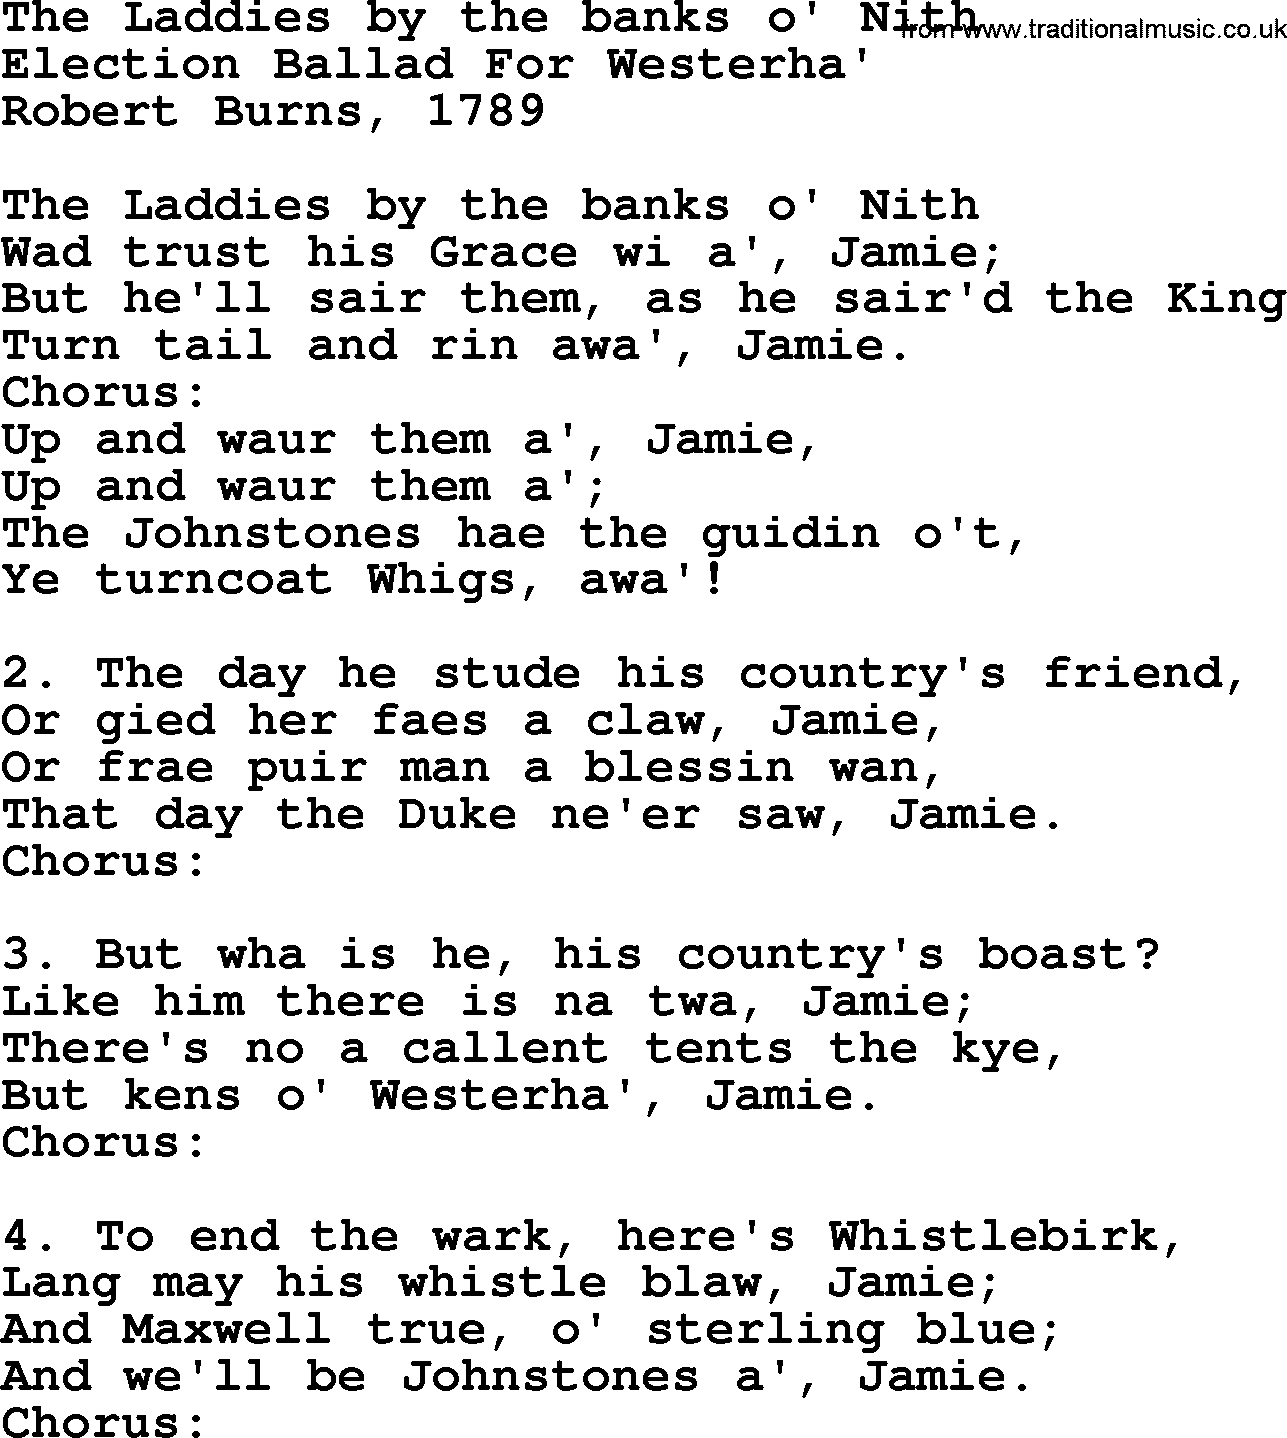 Robert Burns Songs & Lyrics: The Laddies By The Banks O' Nith